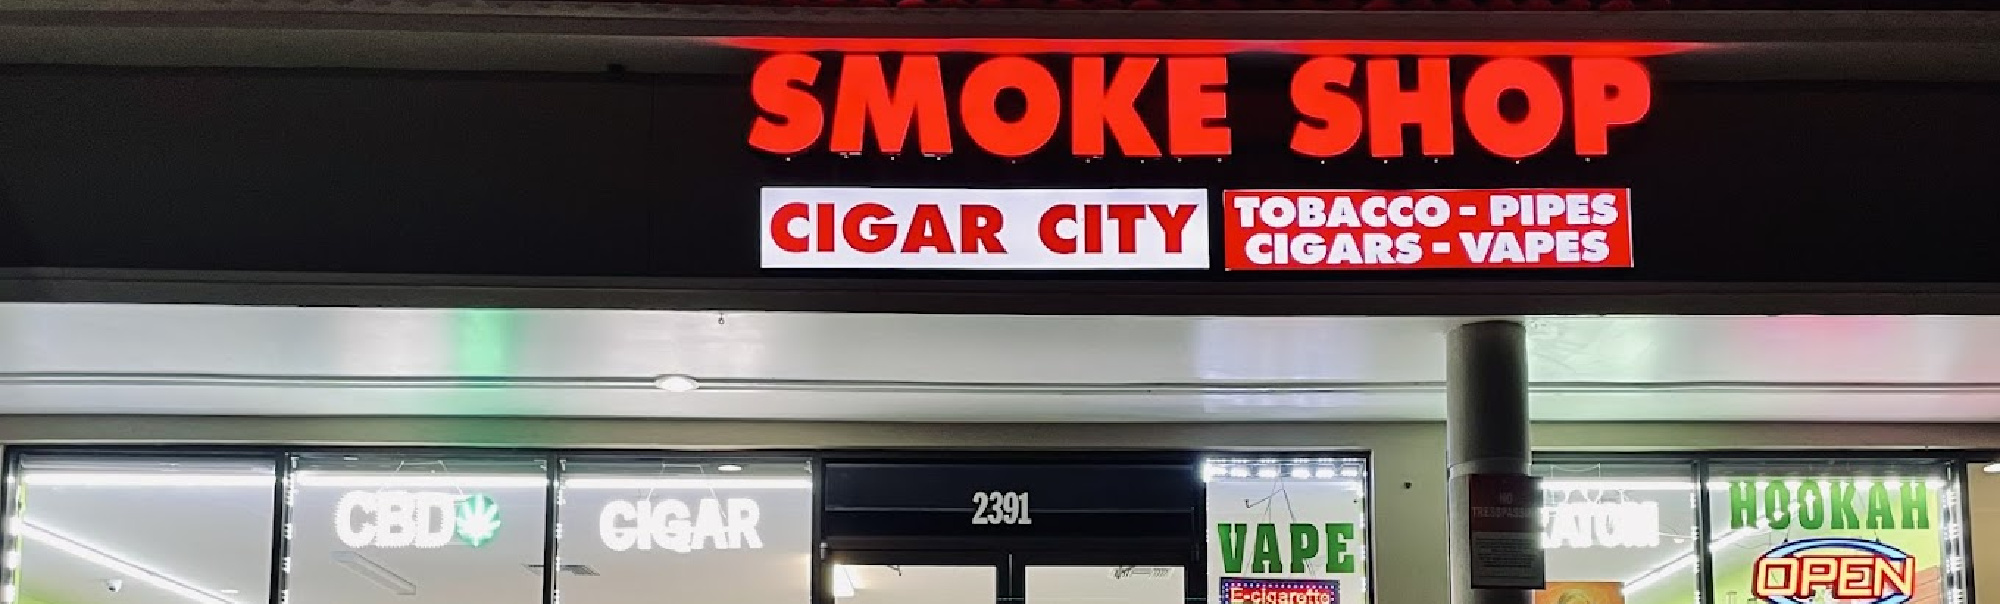 image of cigar city smoke shop in ocala fl